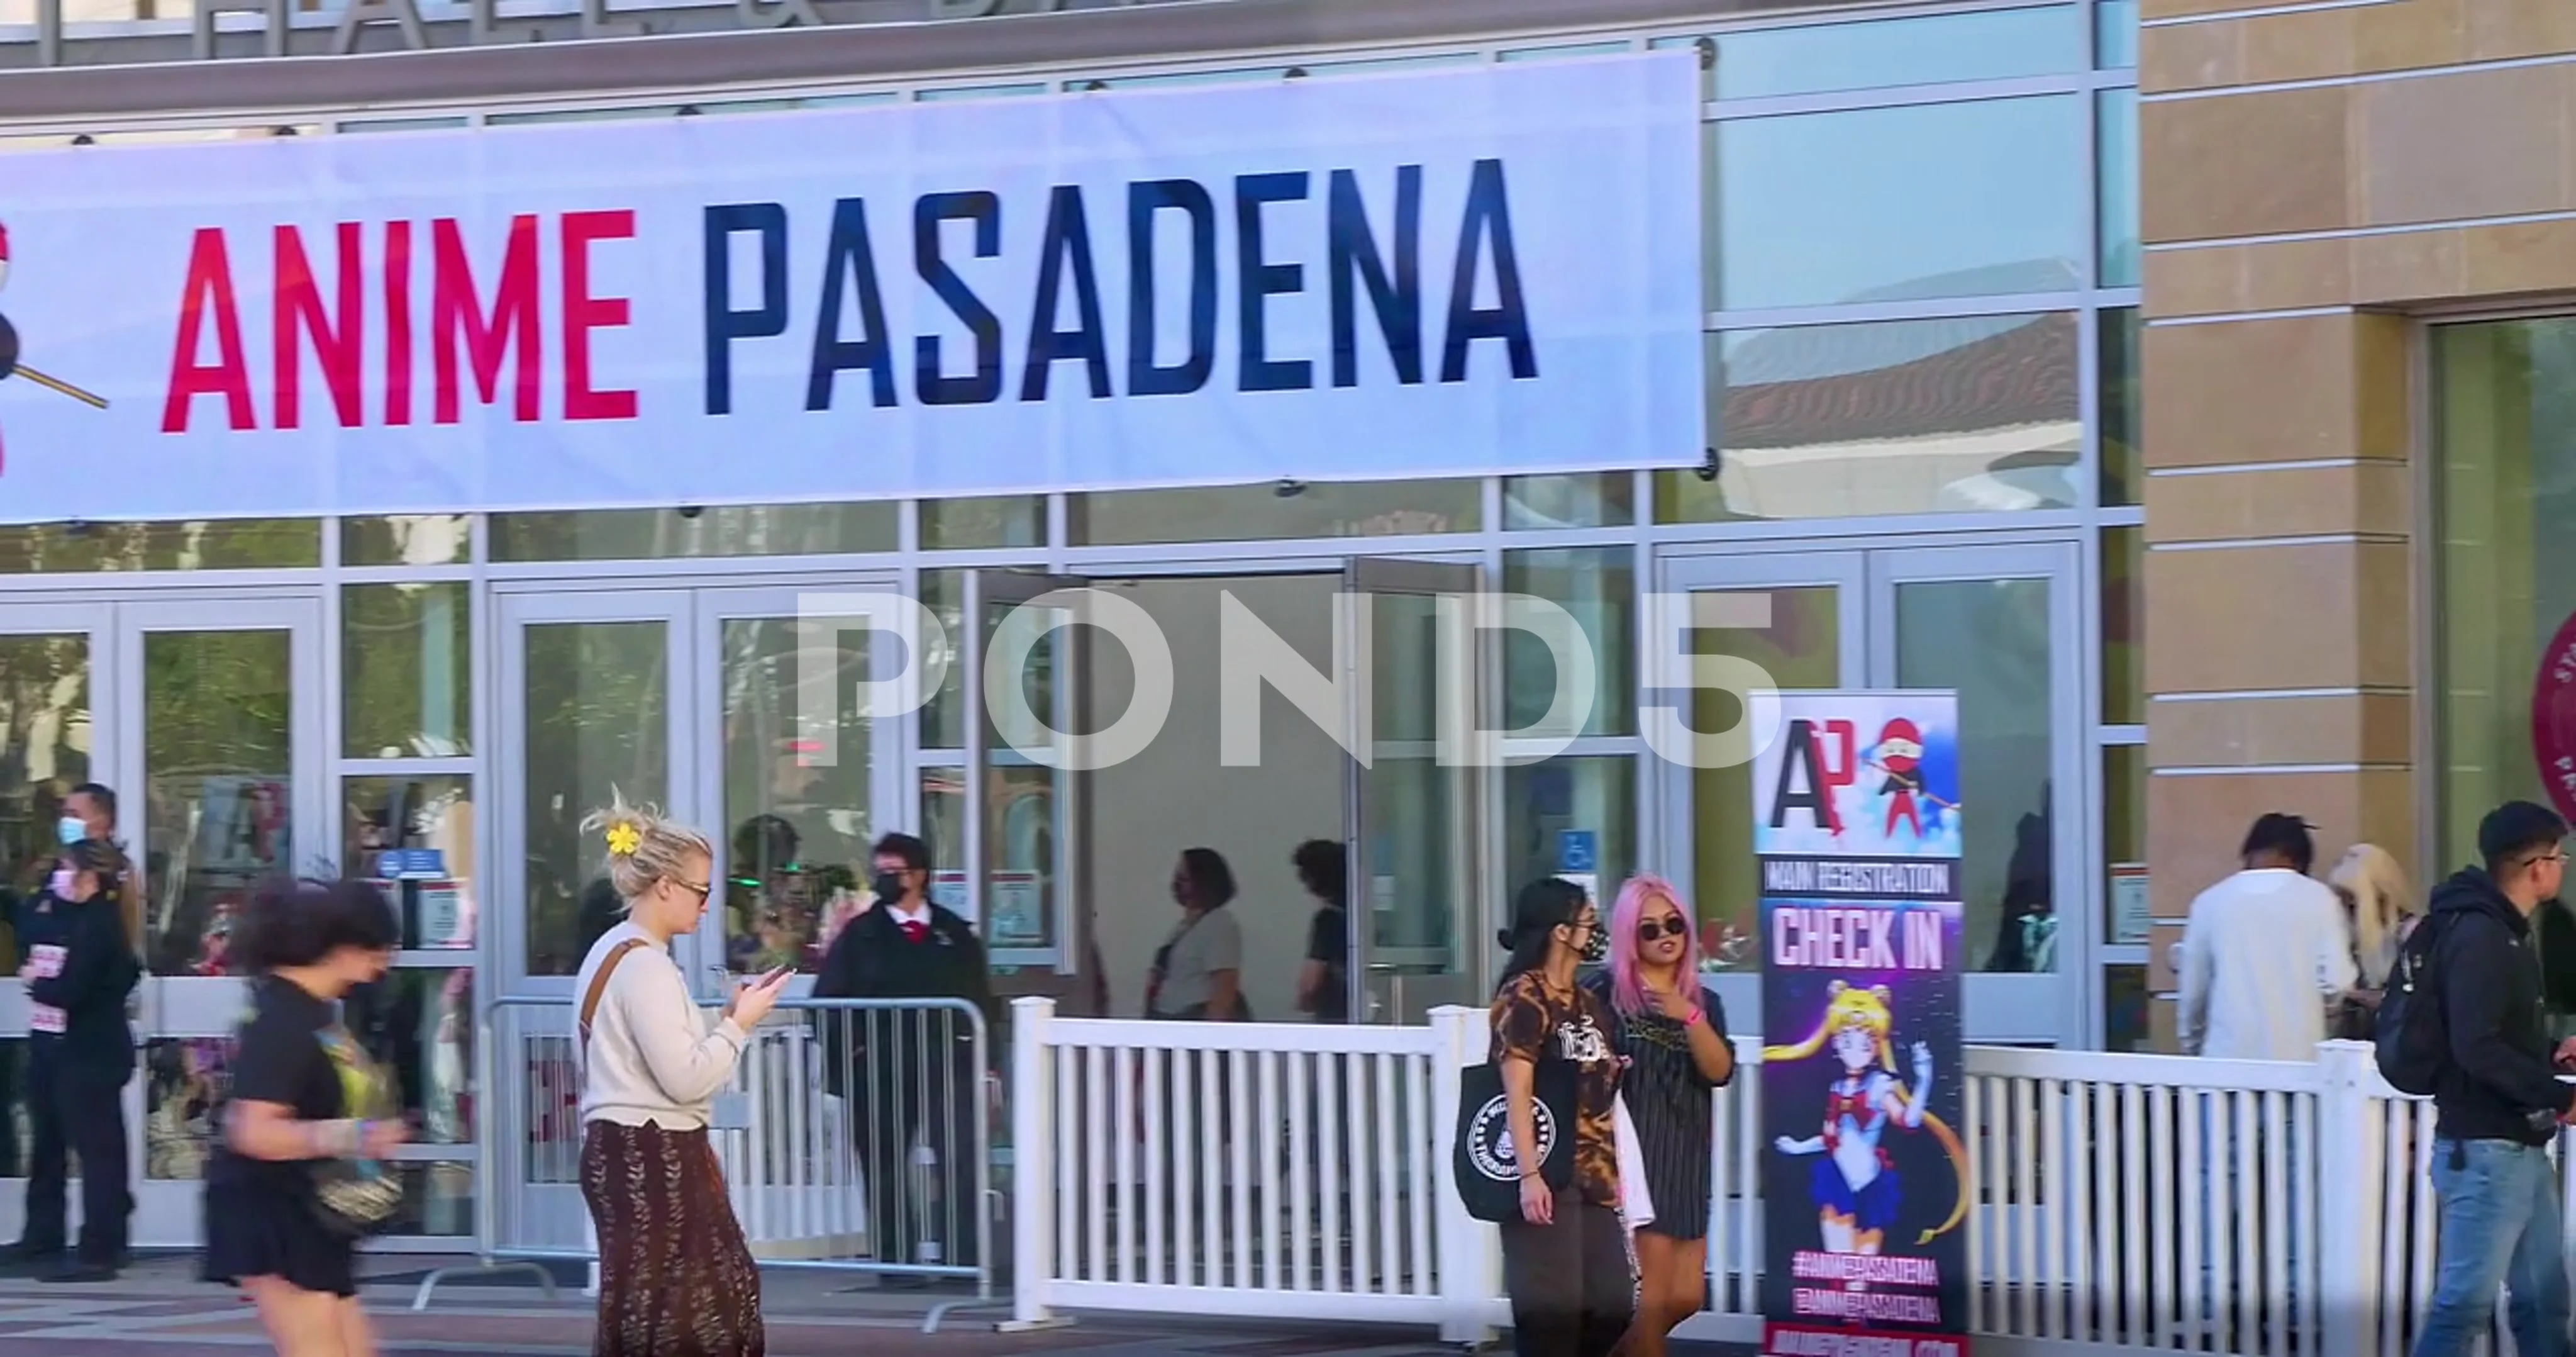 AnimeVerse Fest Pasadena Tx Tickets at Pasadena Event Center Texas in  Pasadena by Anime Verse Fest  Tixr